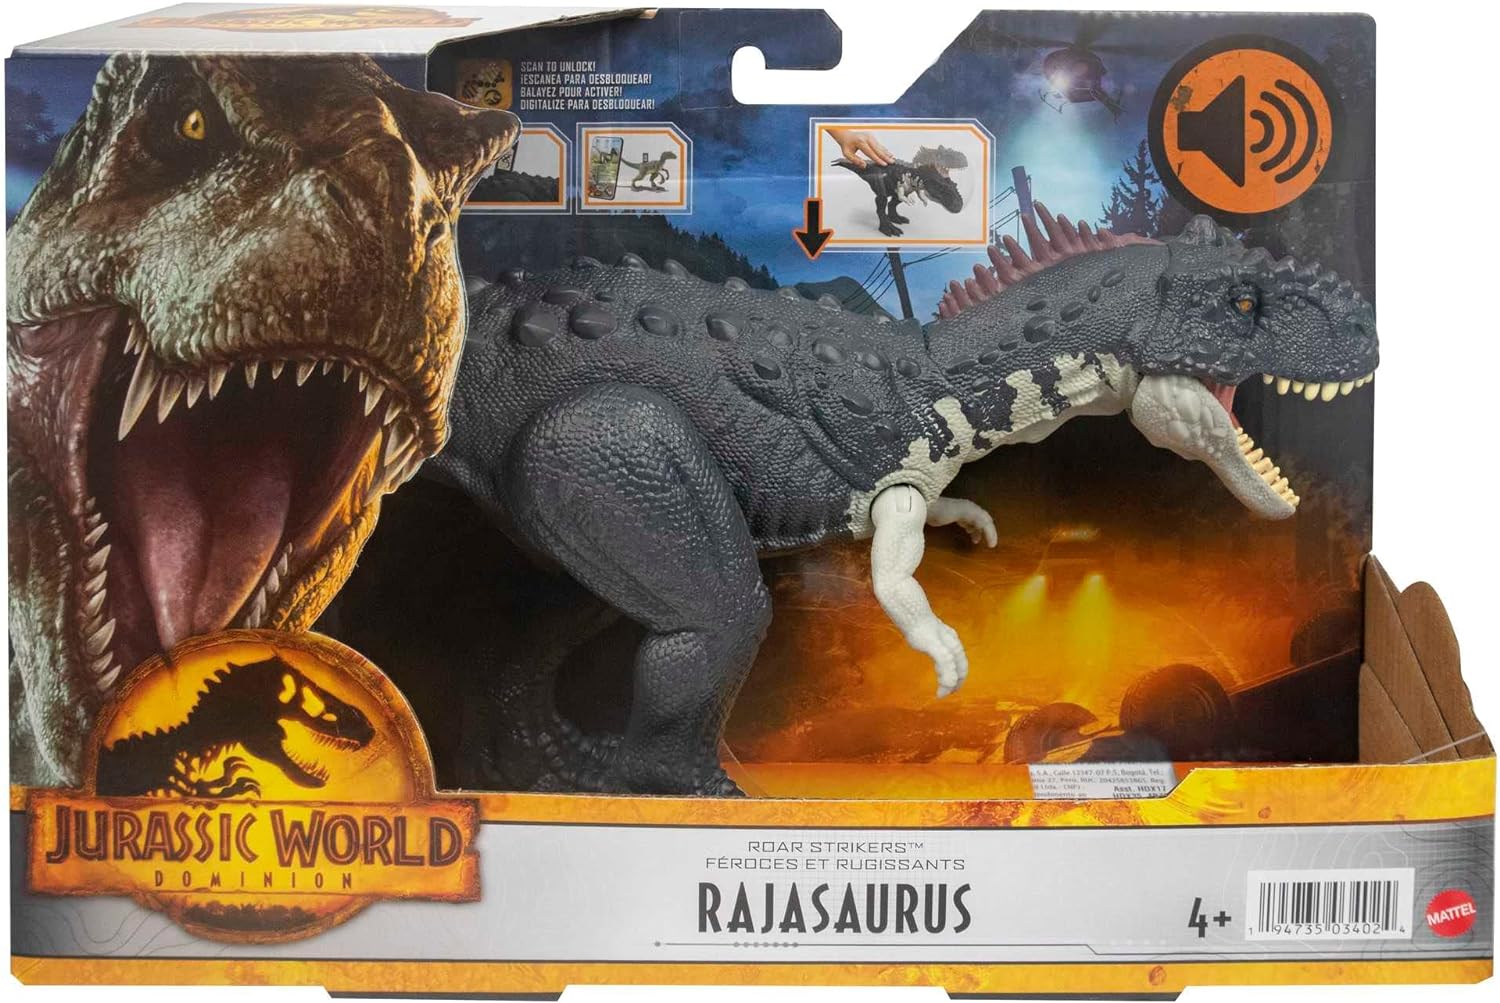 Rajasauro Jurassic World Dominion